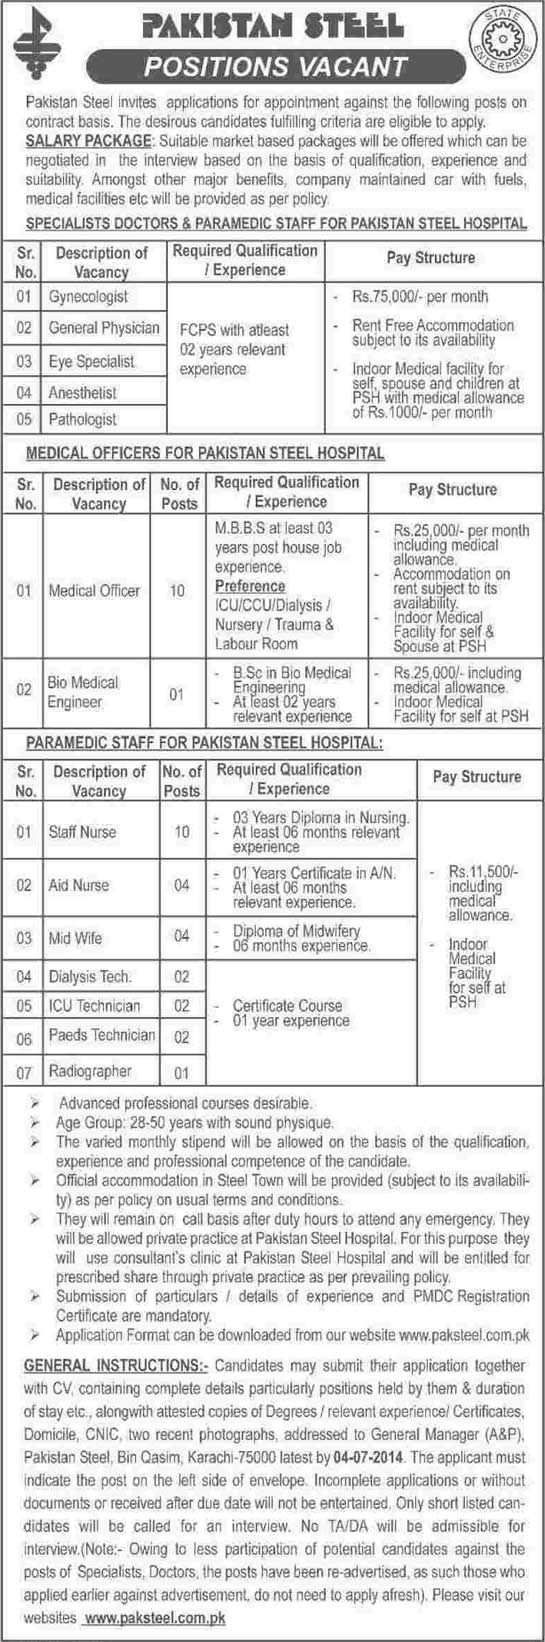 Pakistan Steel Hospital Jobs 2014 June for Medical & Paramedical Staff